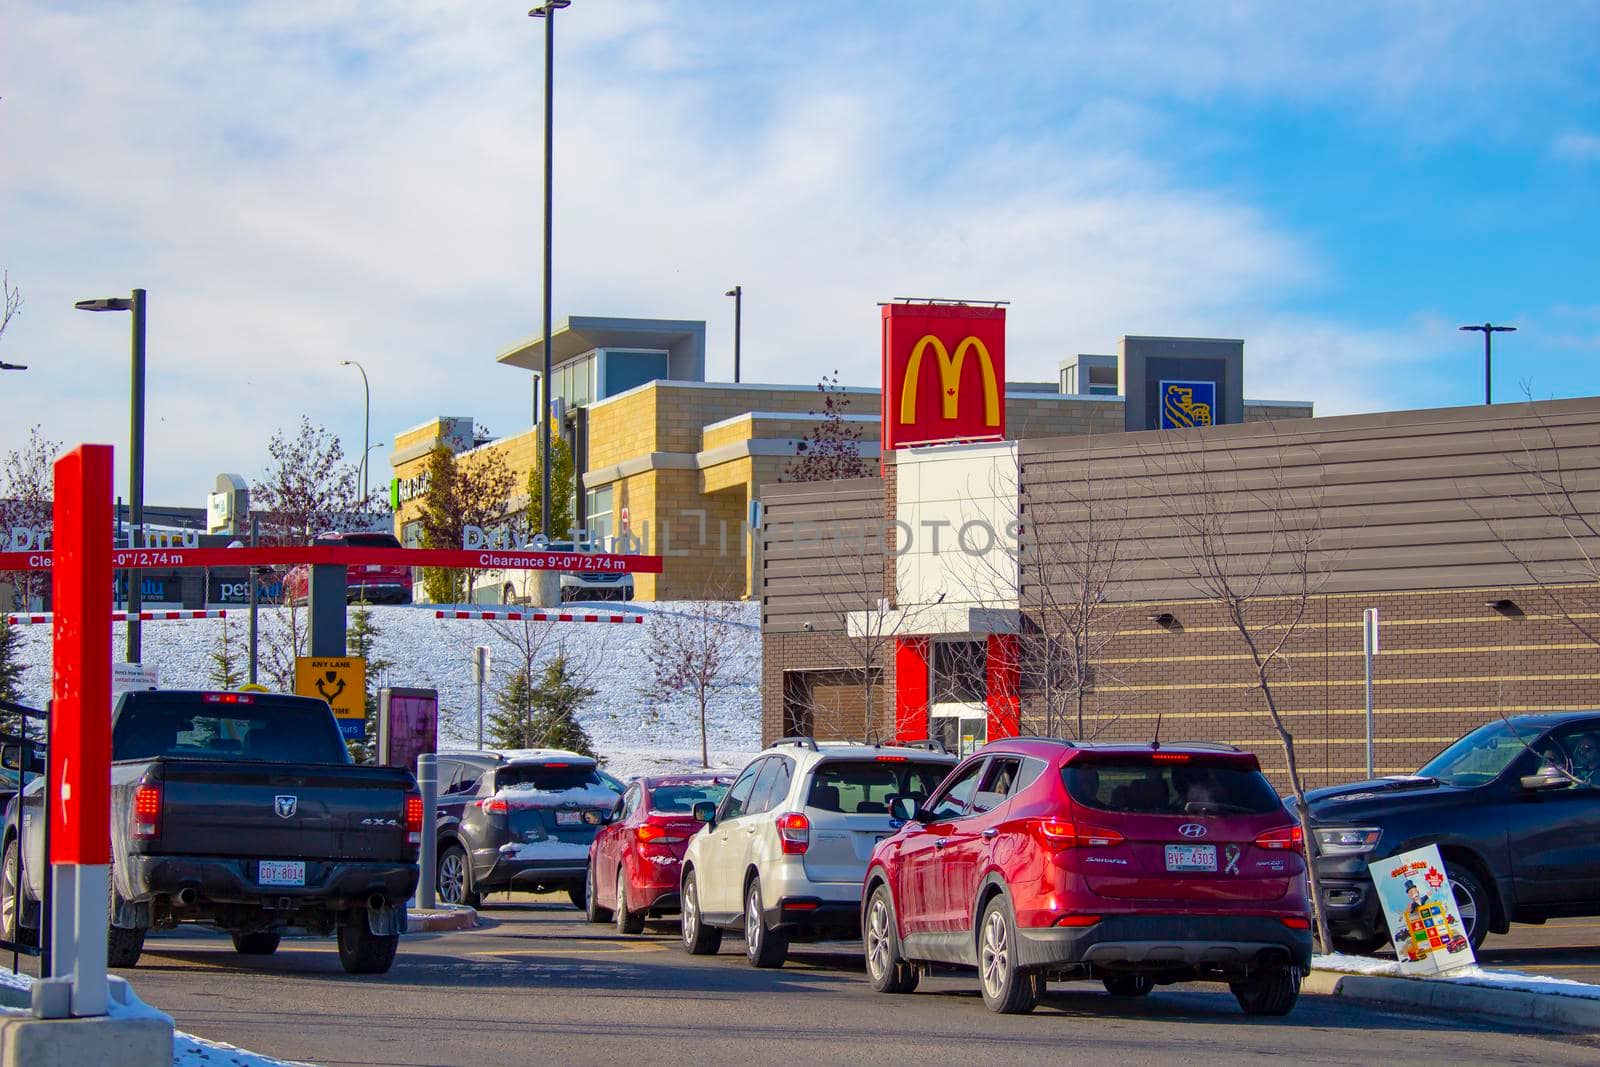 Calgary Alberta, Canada. Oct 17, 2020. A Drive thru McDonald’s, an American fast food company restaurant from San Bernardino, California, United States. by oasisamuel